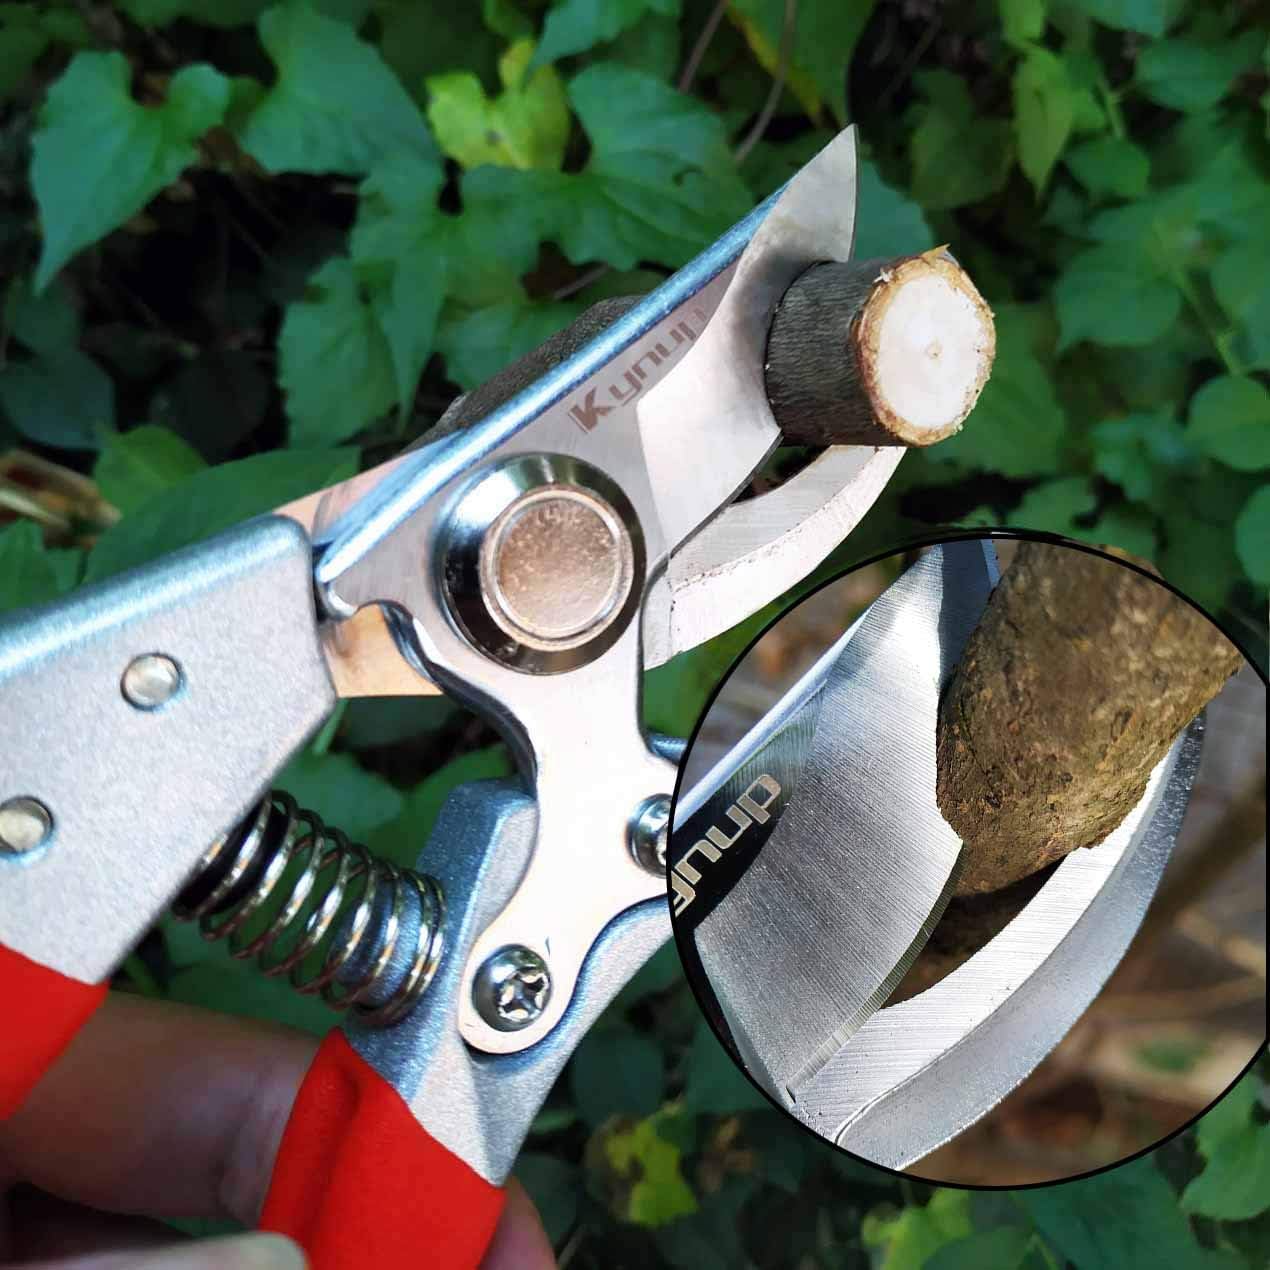  WHATOOK Pruning Shears for Gardening, Heavy Duty Hand